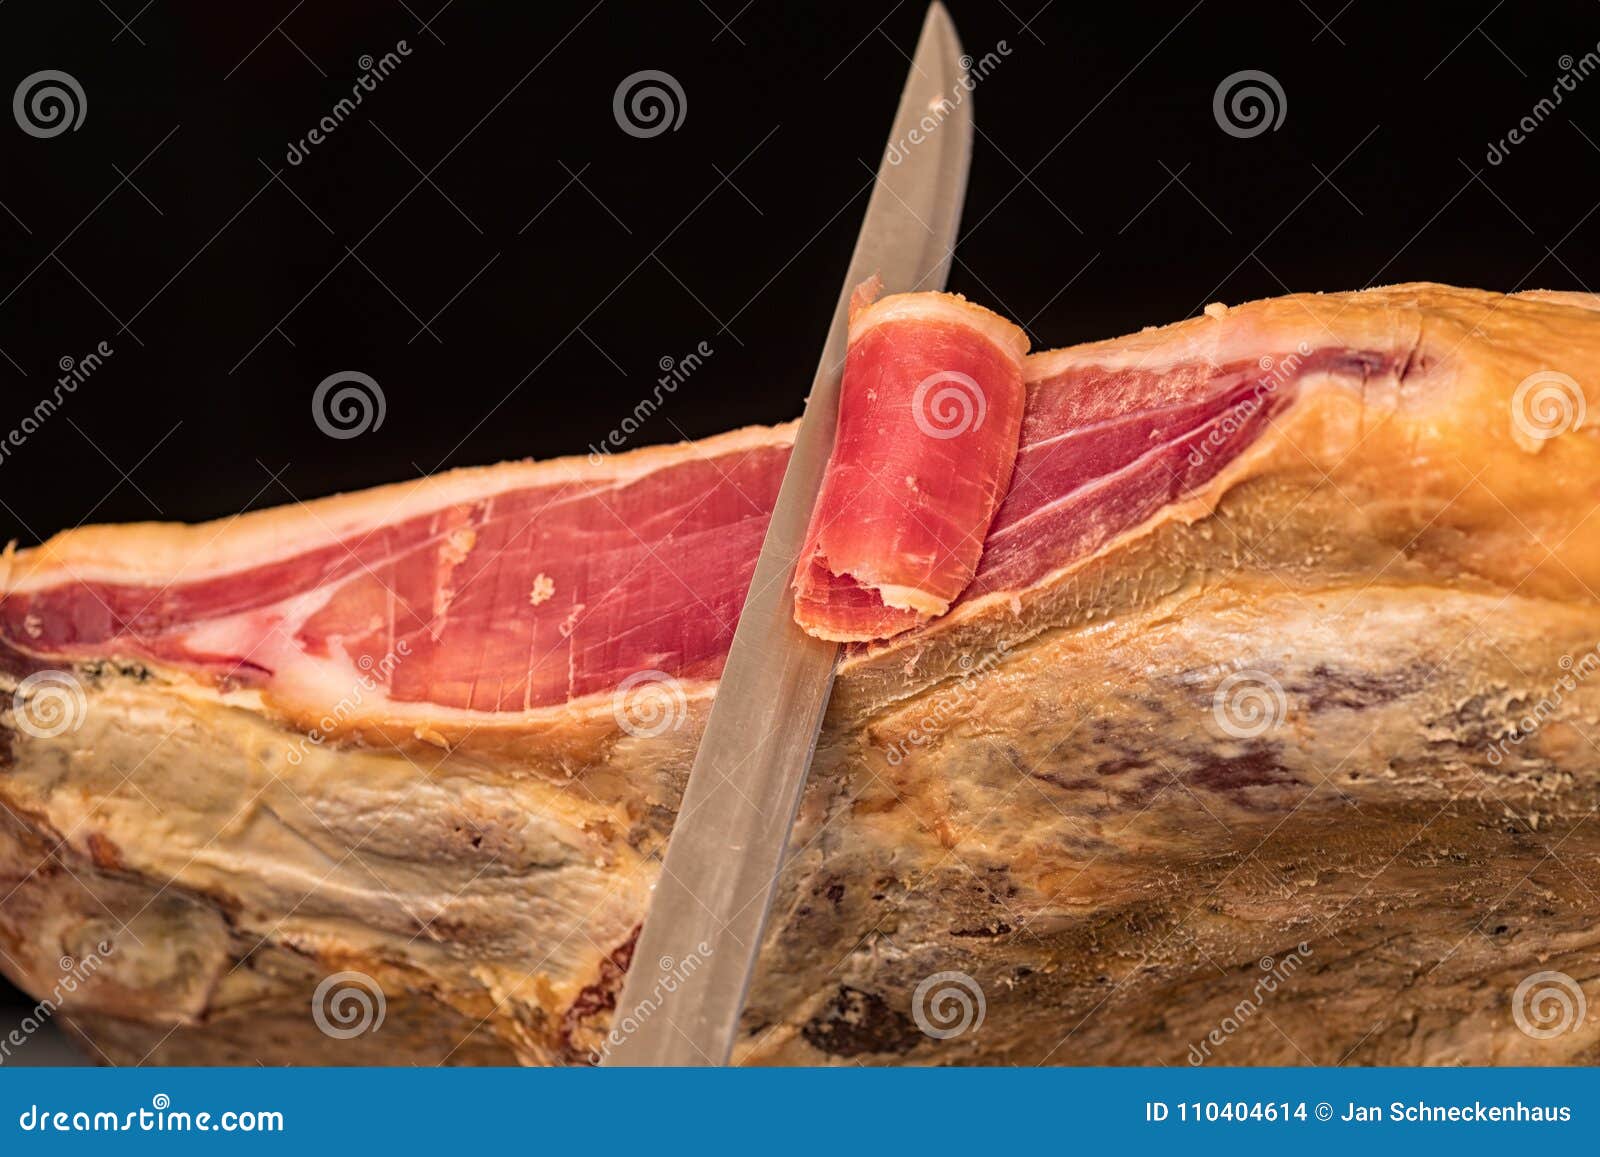 a knife cutting a spanish serrano ham